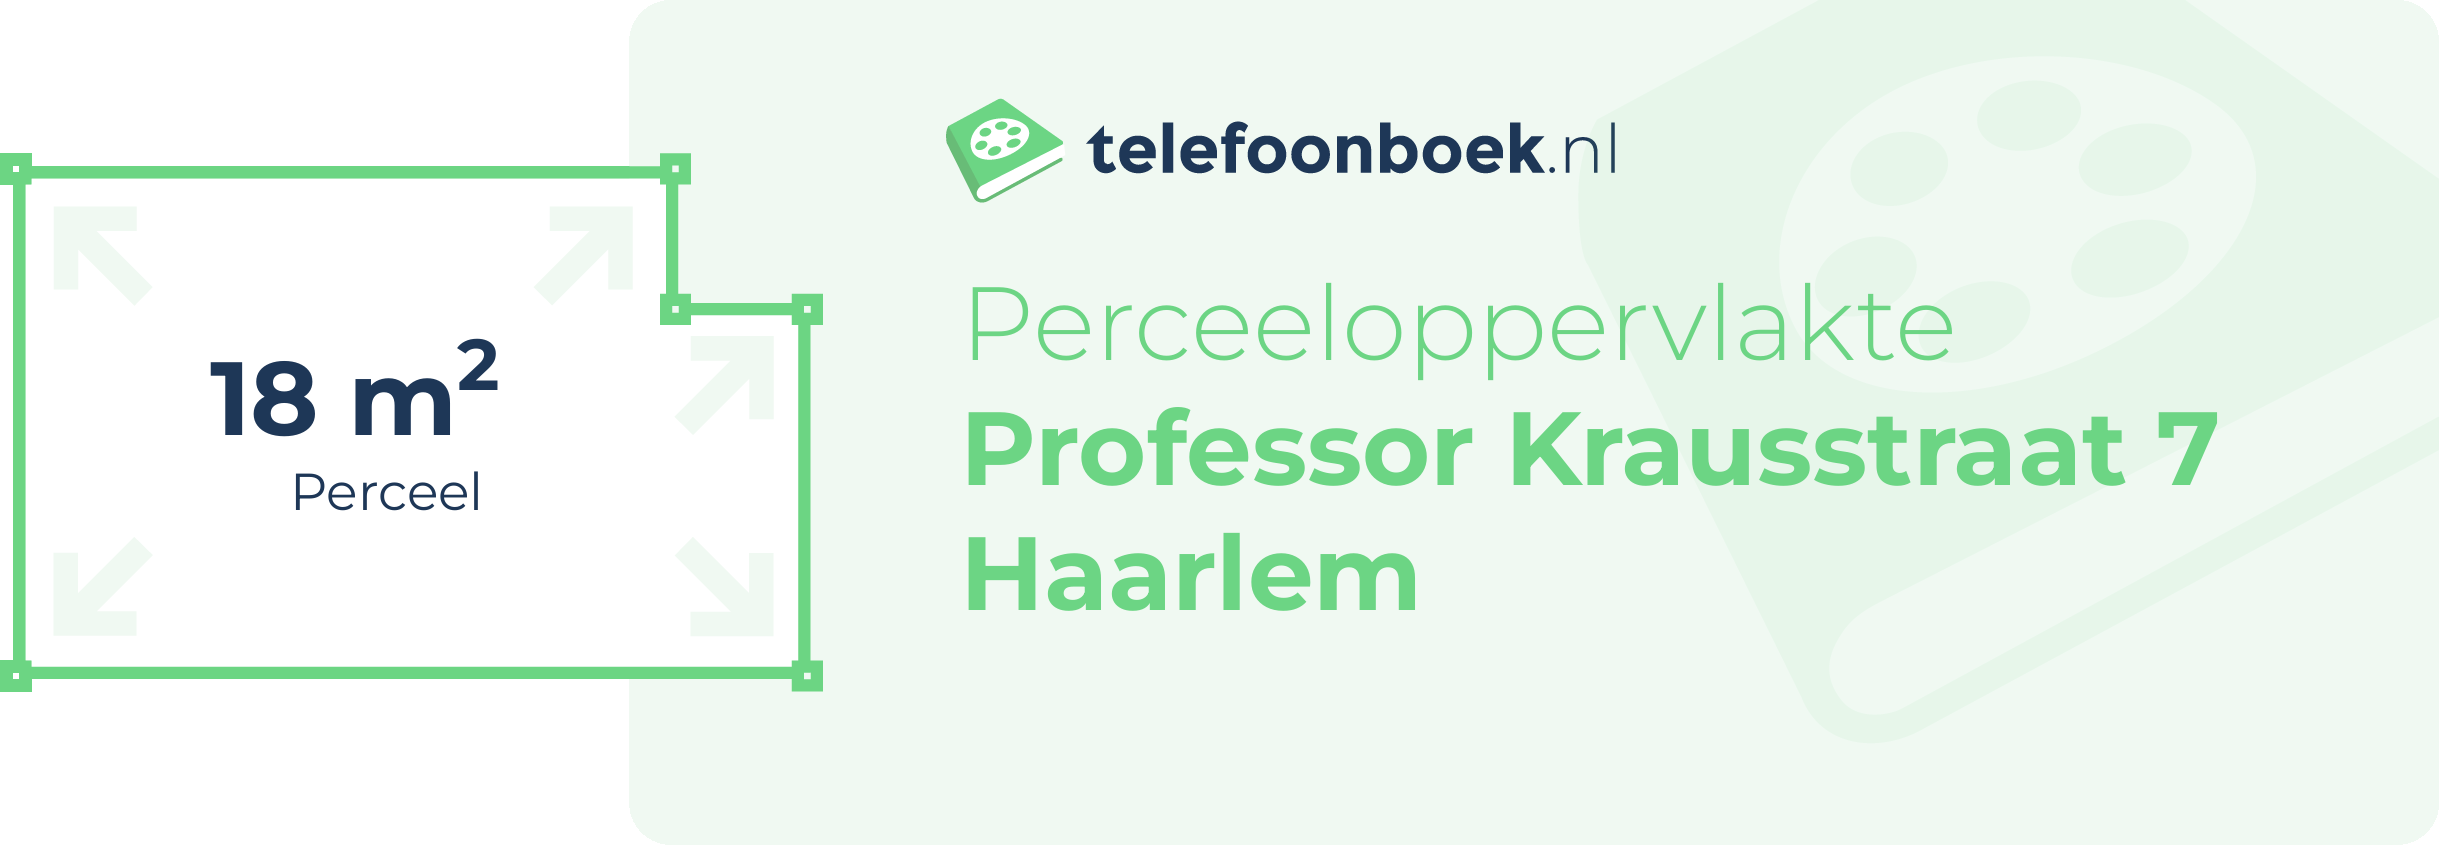 Perceeloppervlakte Professor Krausstraat 7 Haarlem